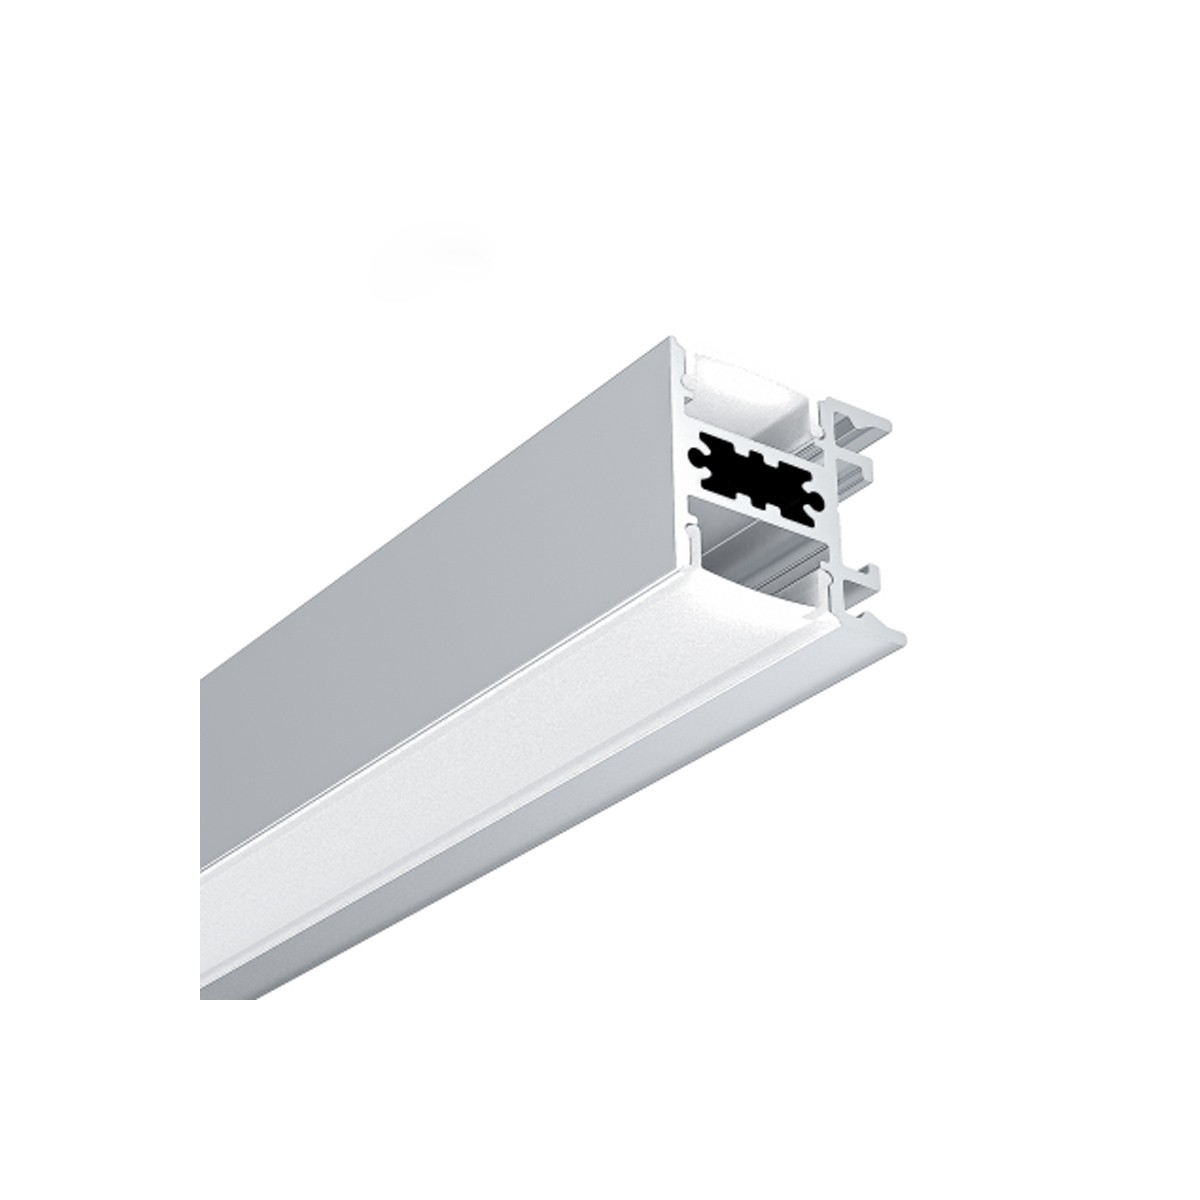 Aluminium double LED strip profile - 23.5x22.6mm - Strip ≤ 12mm - 2 meters